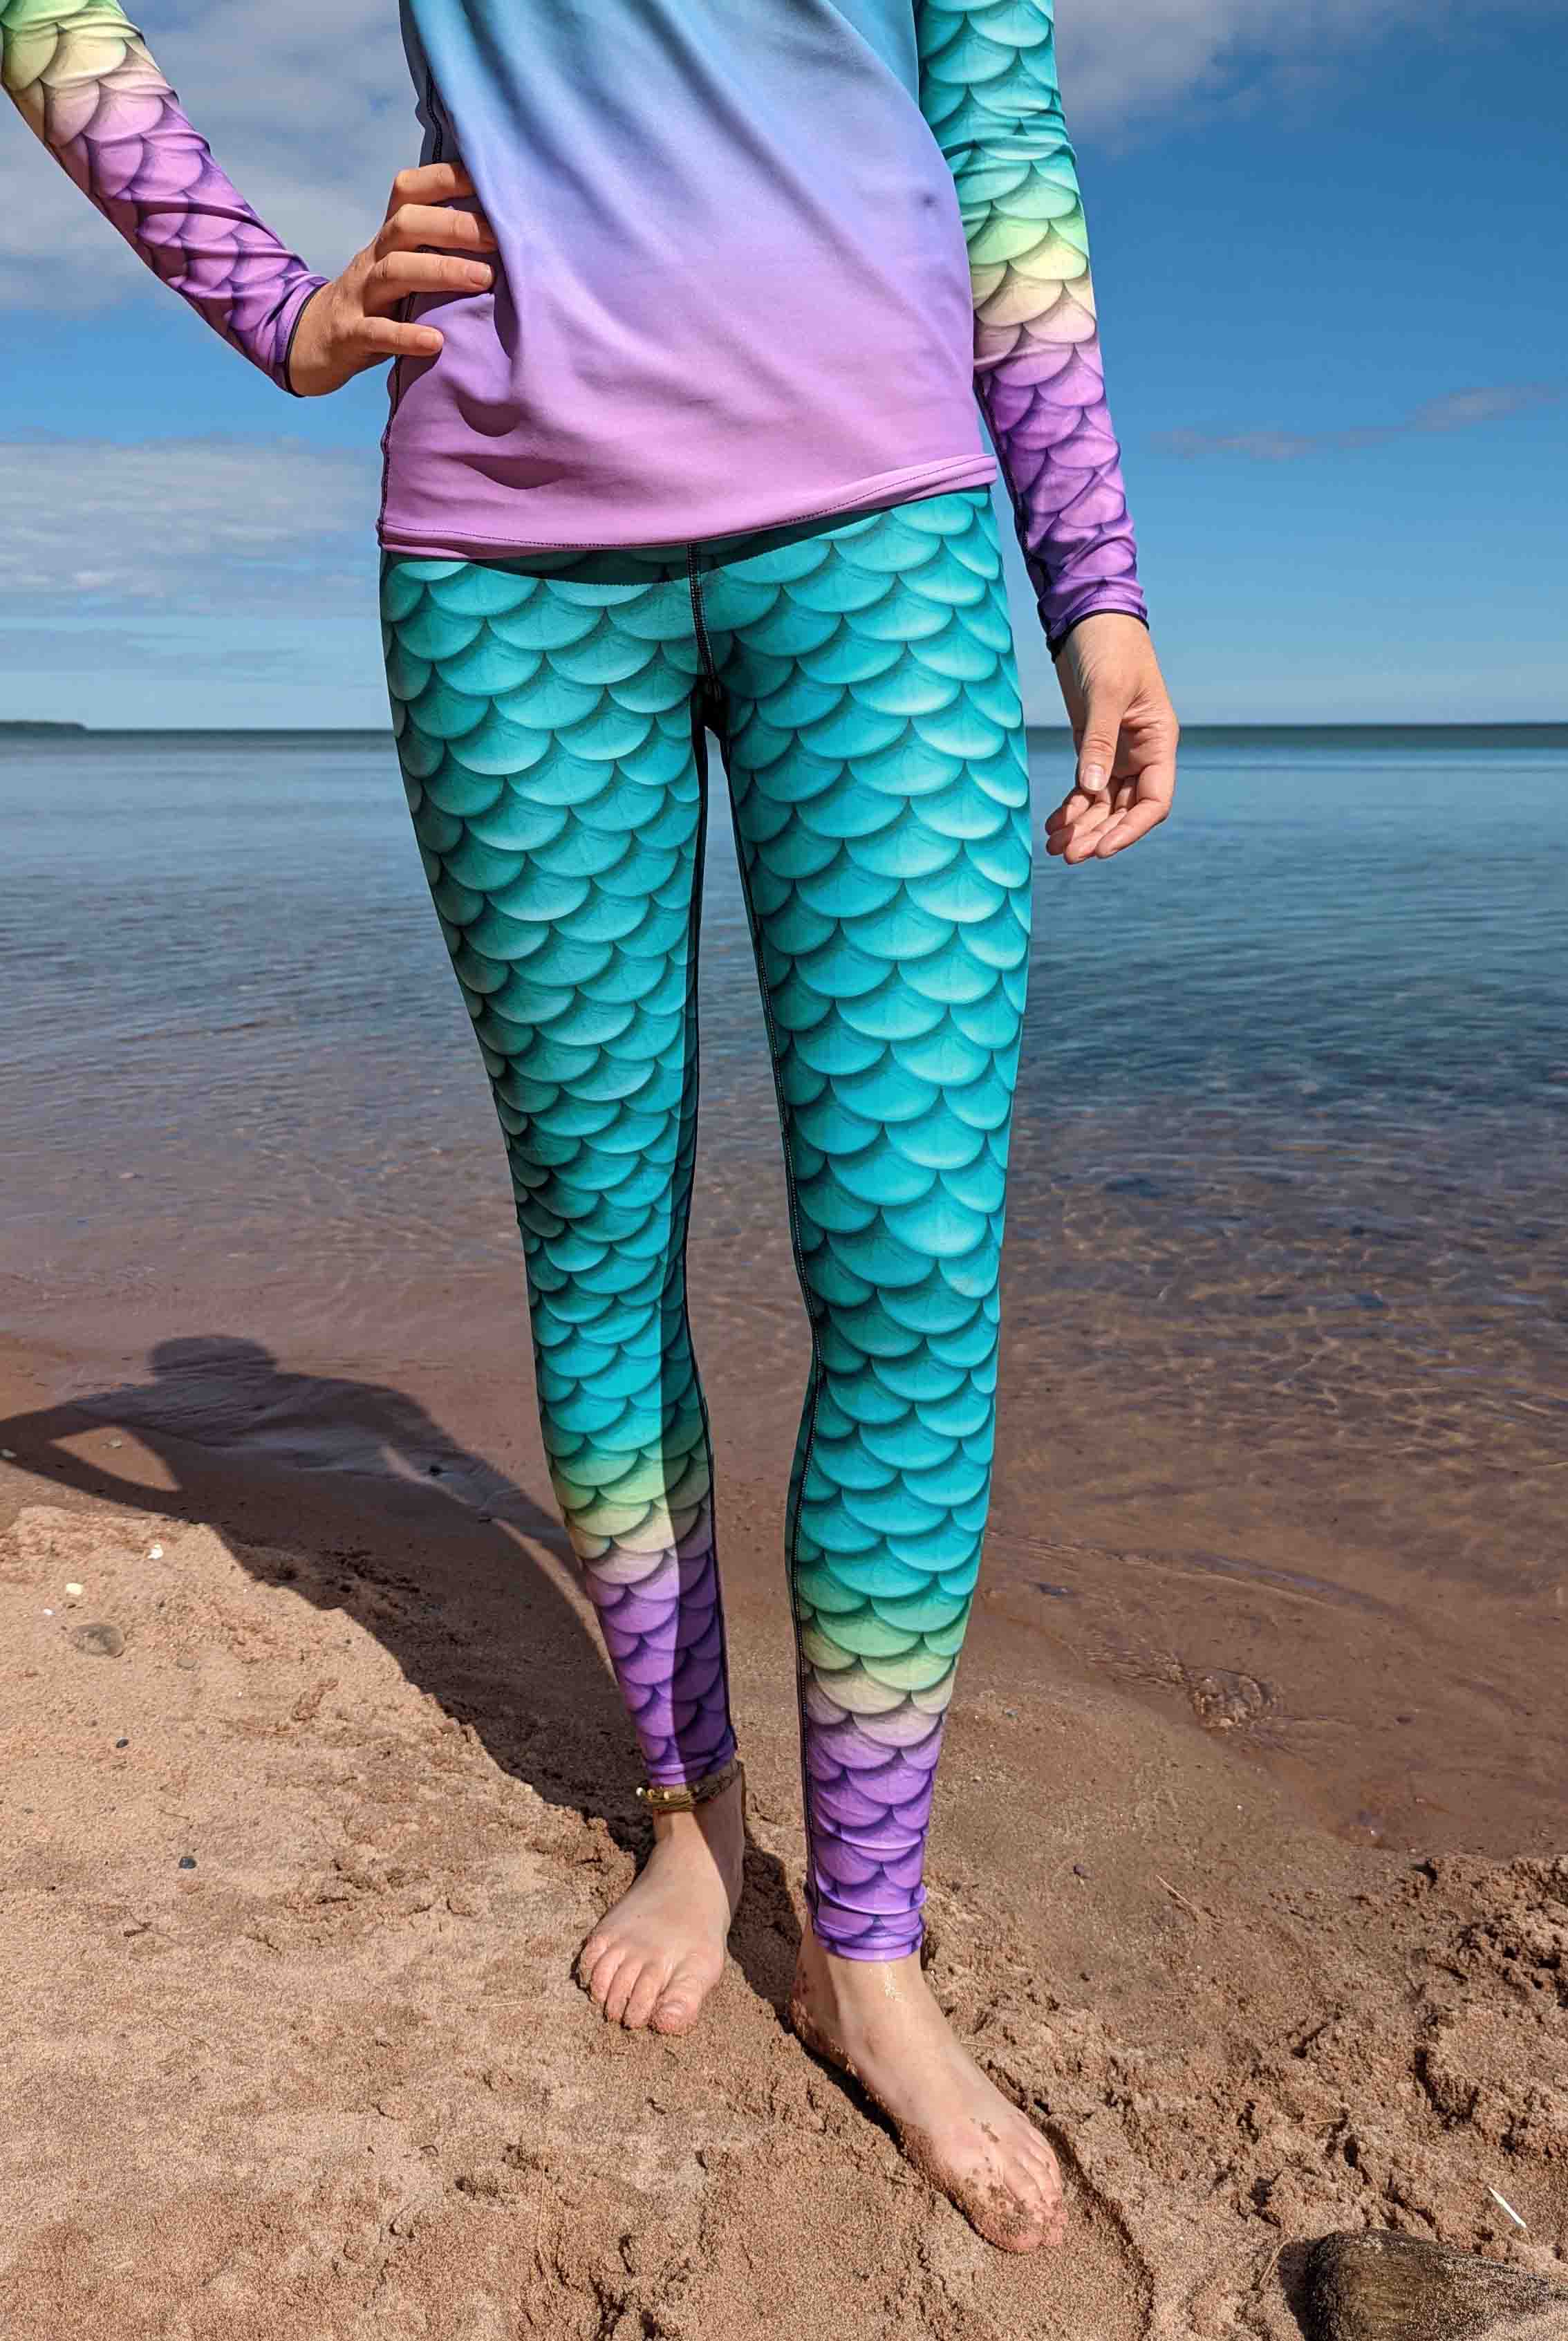 Merbella 'Mermaid' Leggings